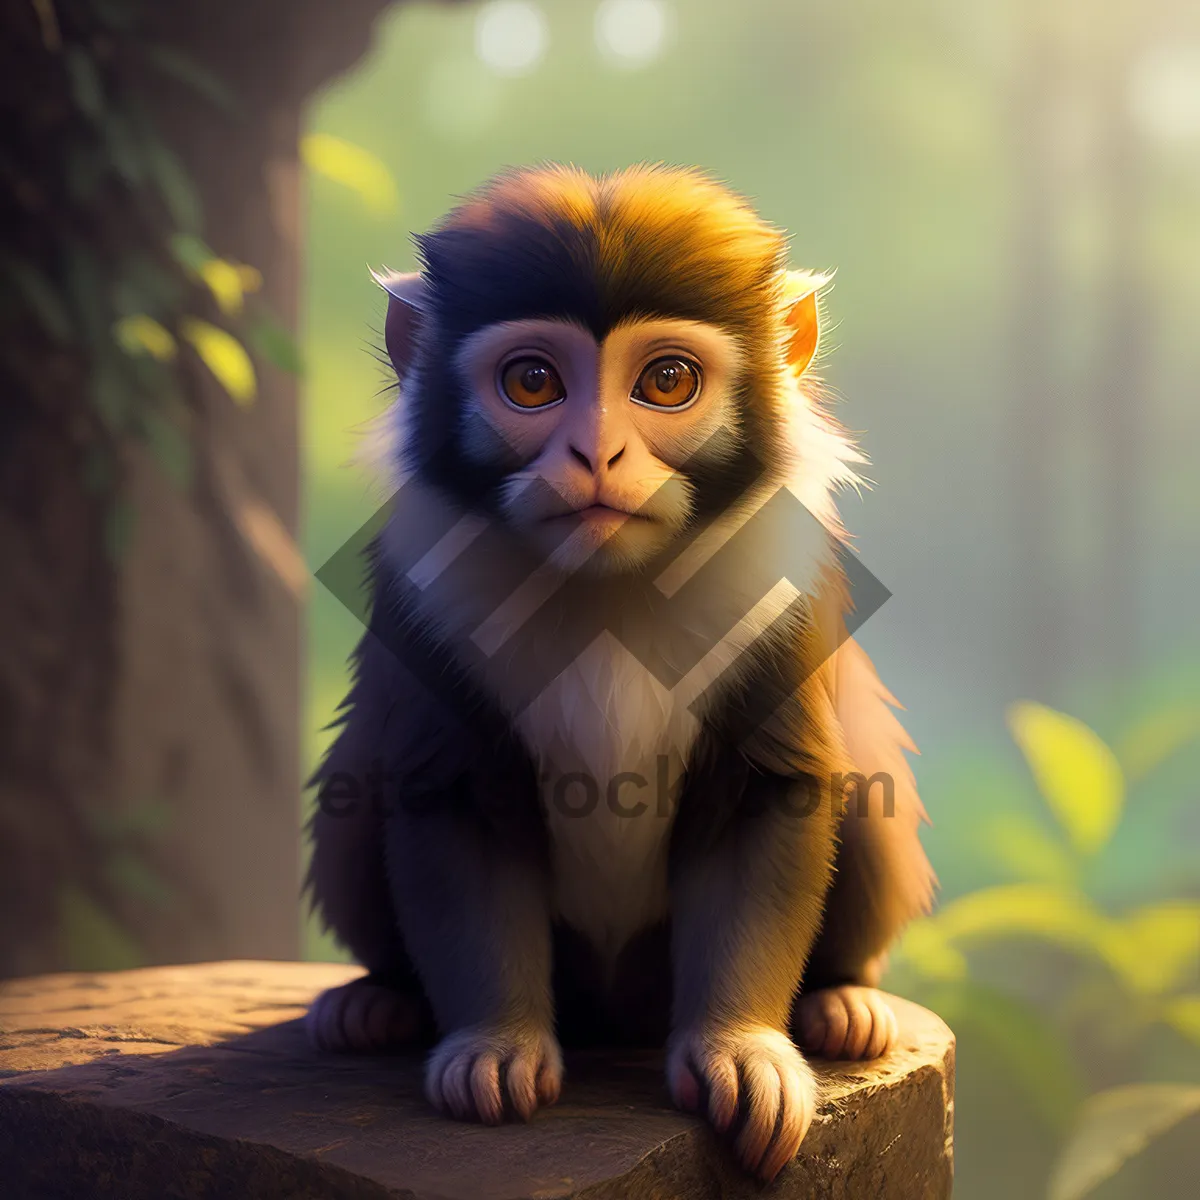 Picture of Cute Monkey in Wild Jungle